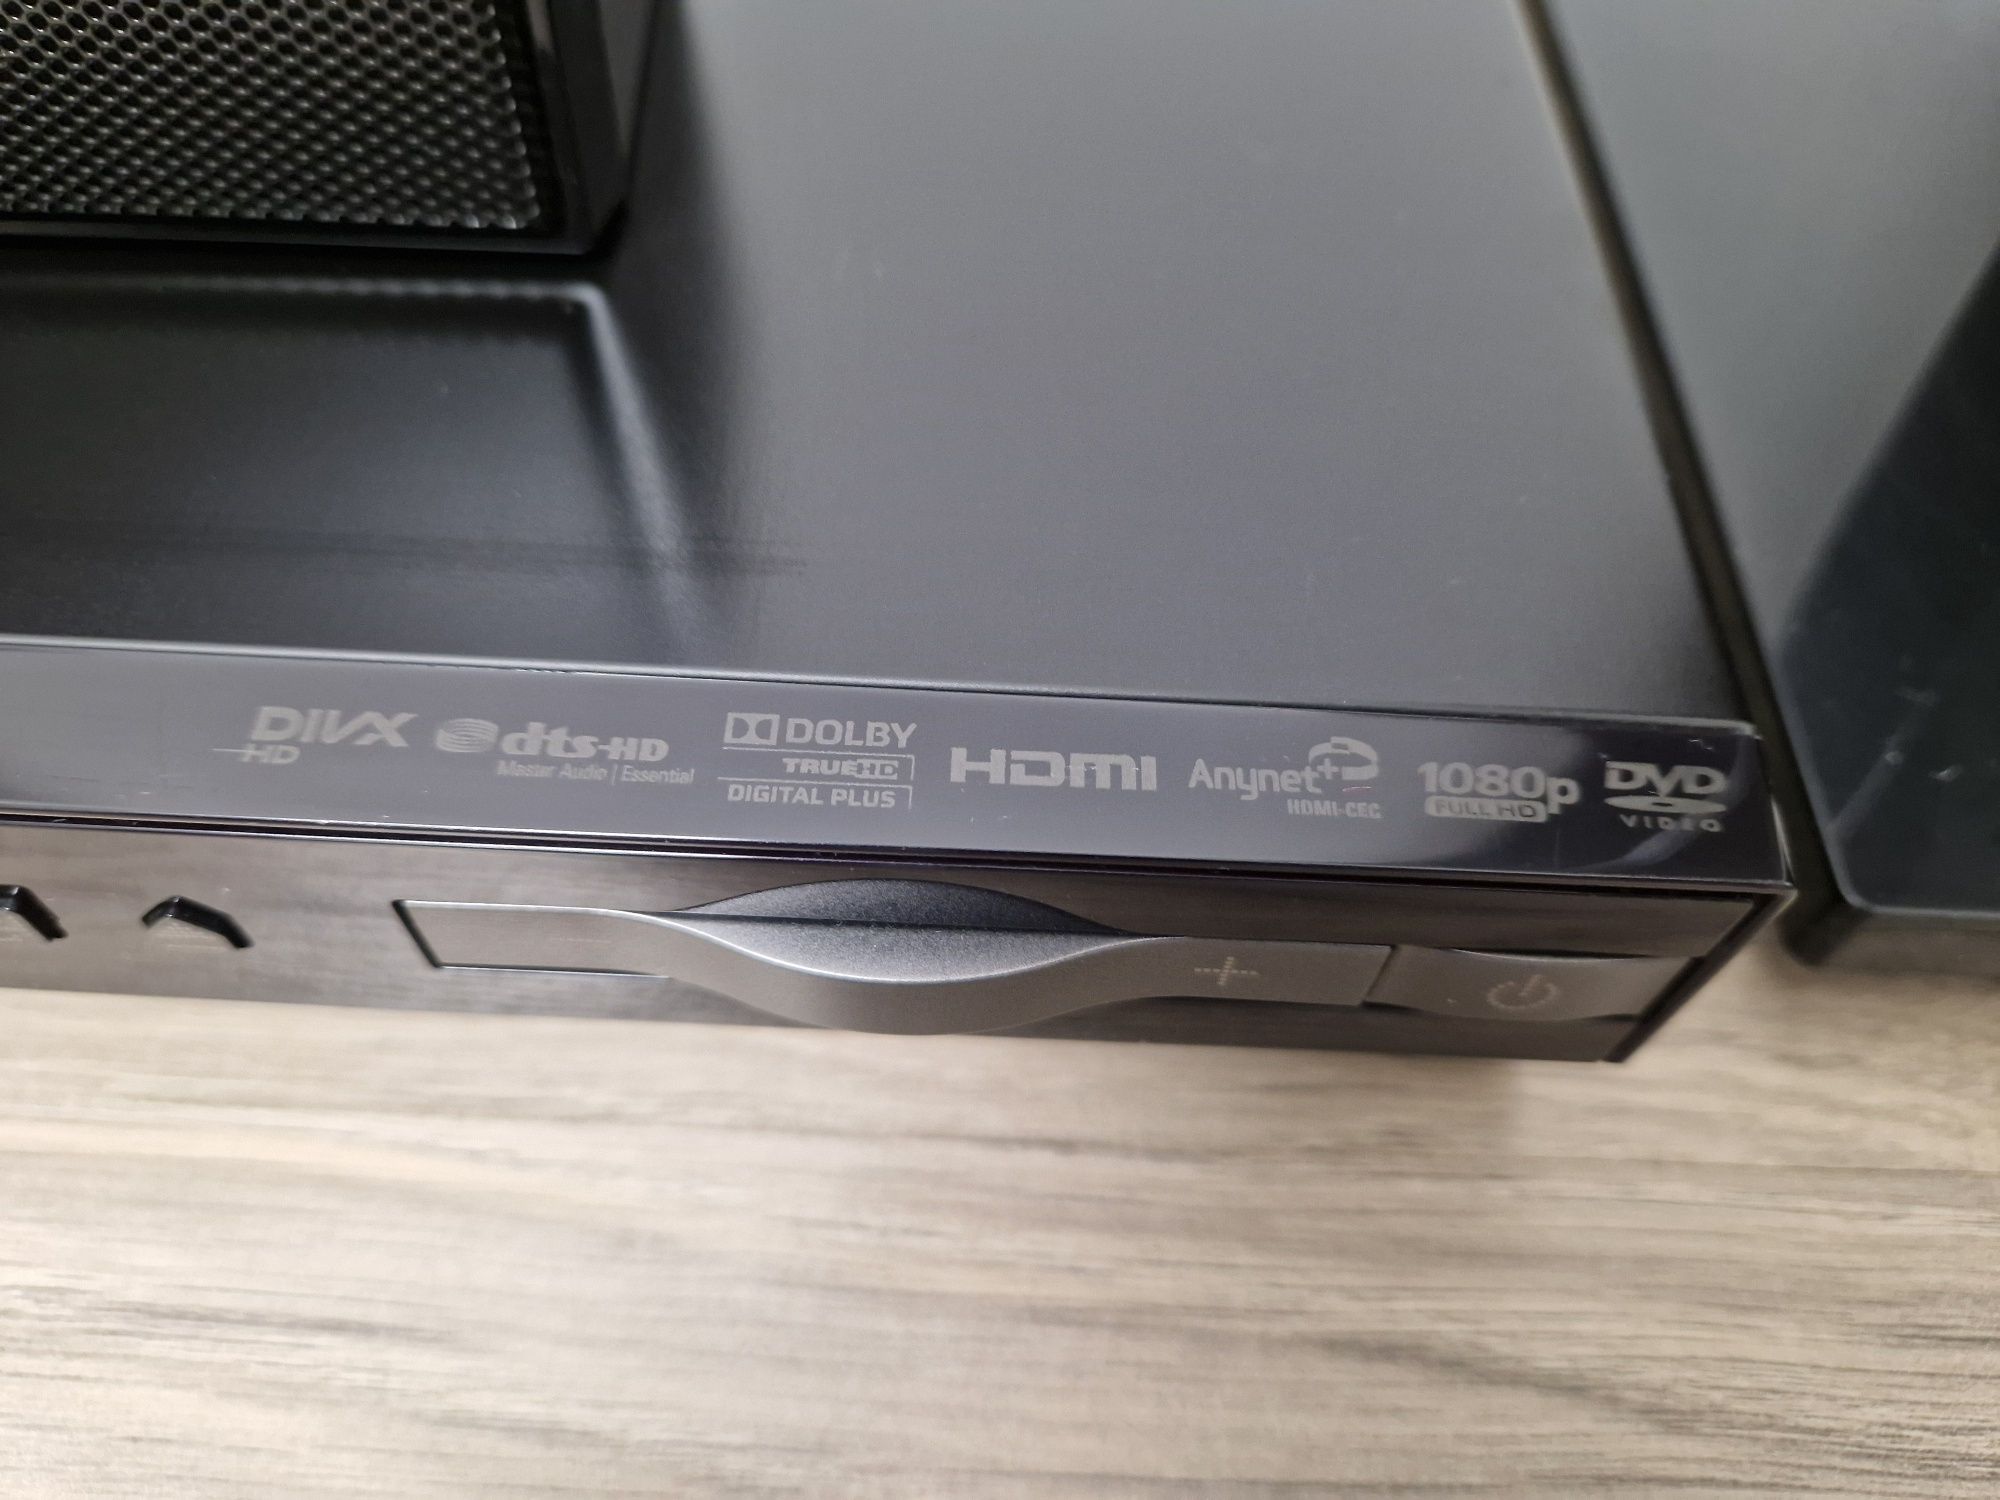 Sistem Home Cinema 5.1, 3D cu Blu-ray
Samsung HT-H4550R, Negru